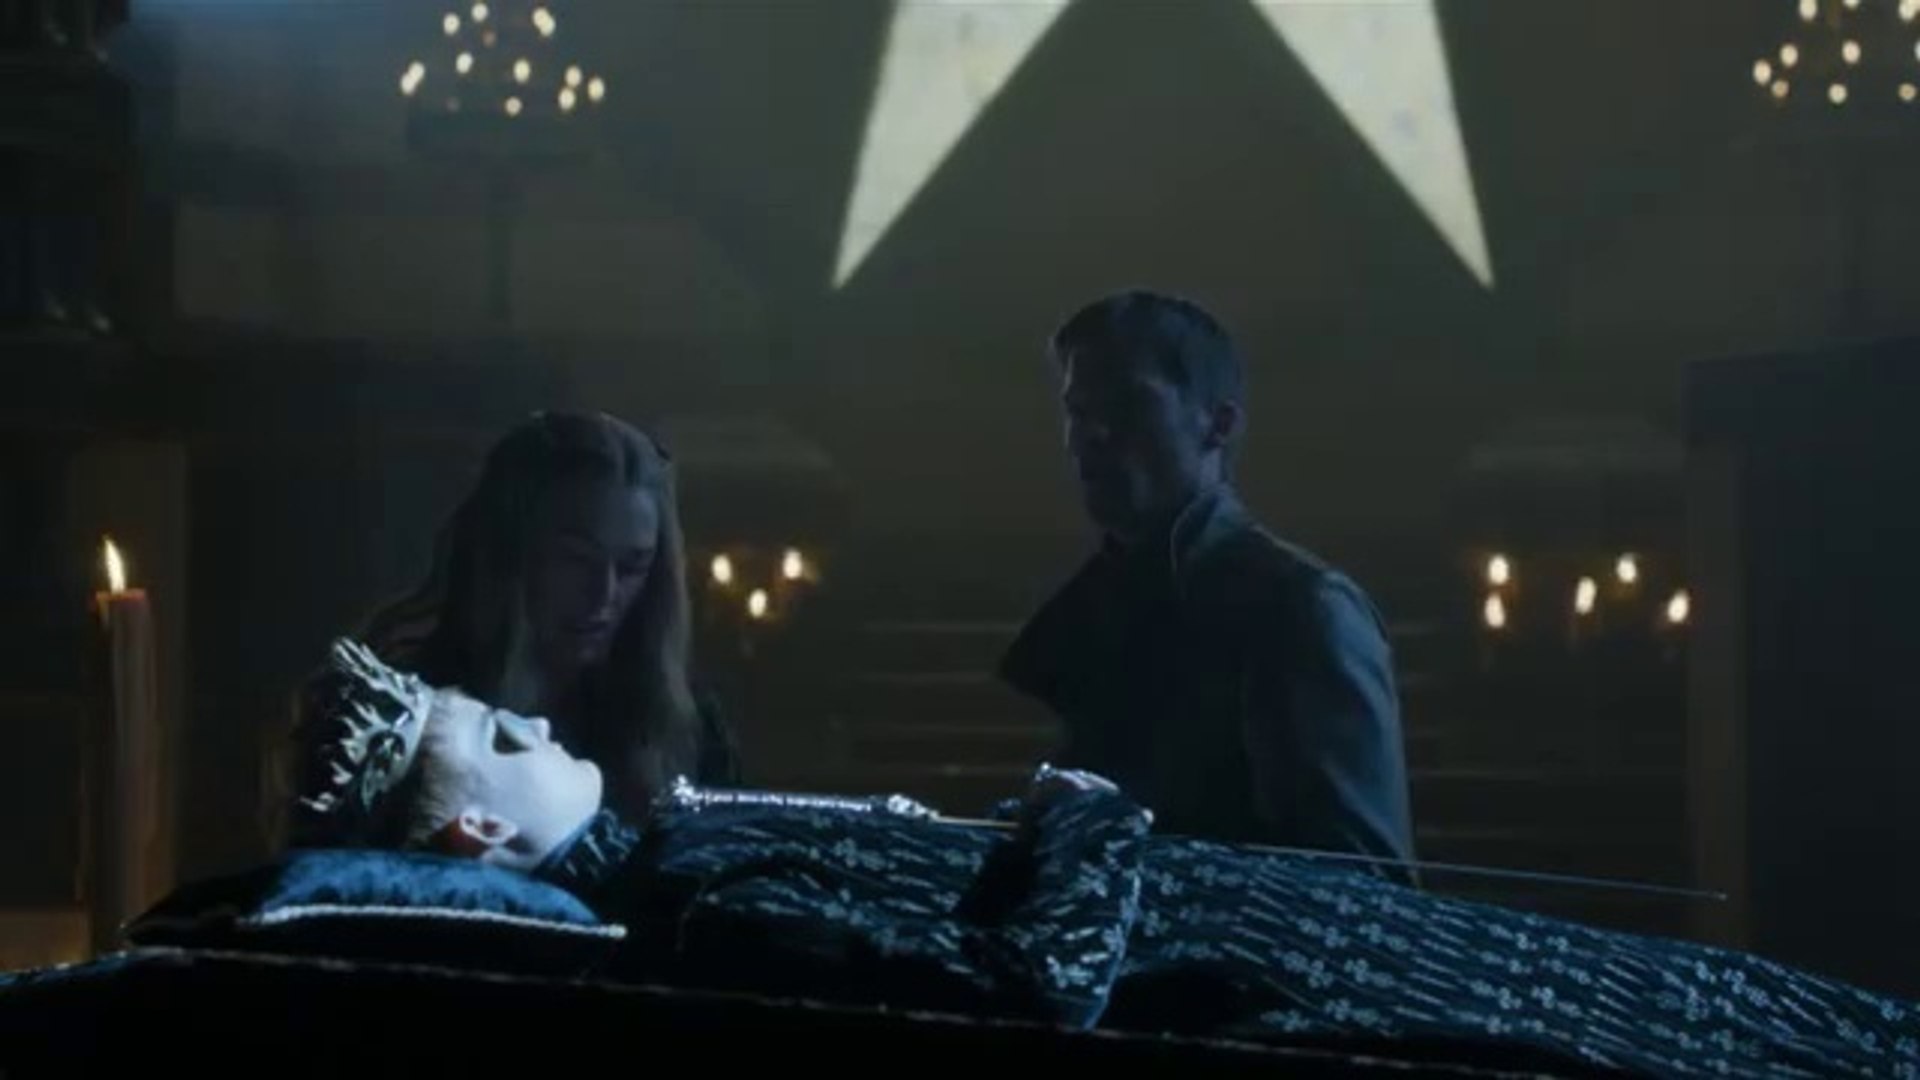 Sex scene next to joffreys body